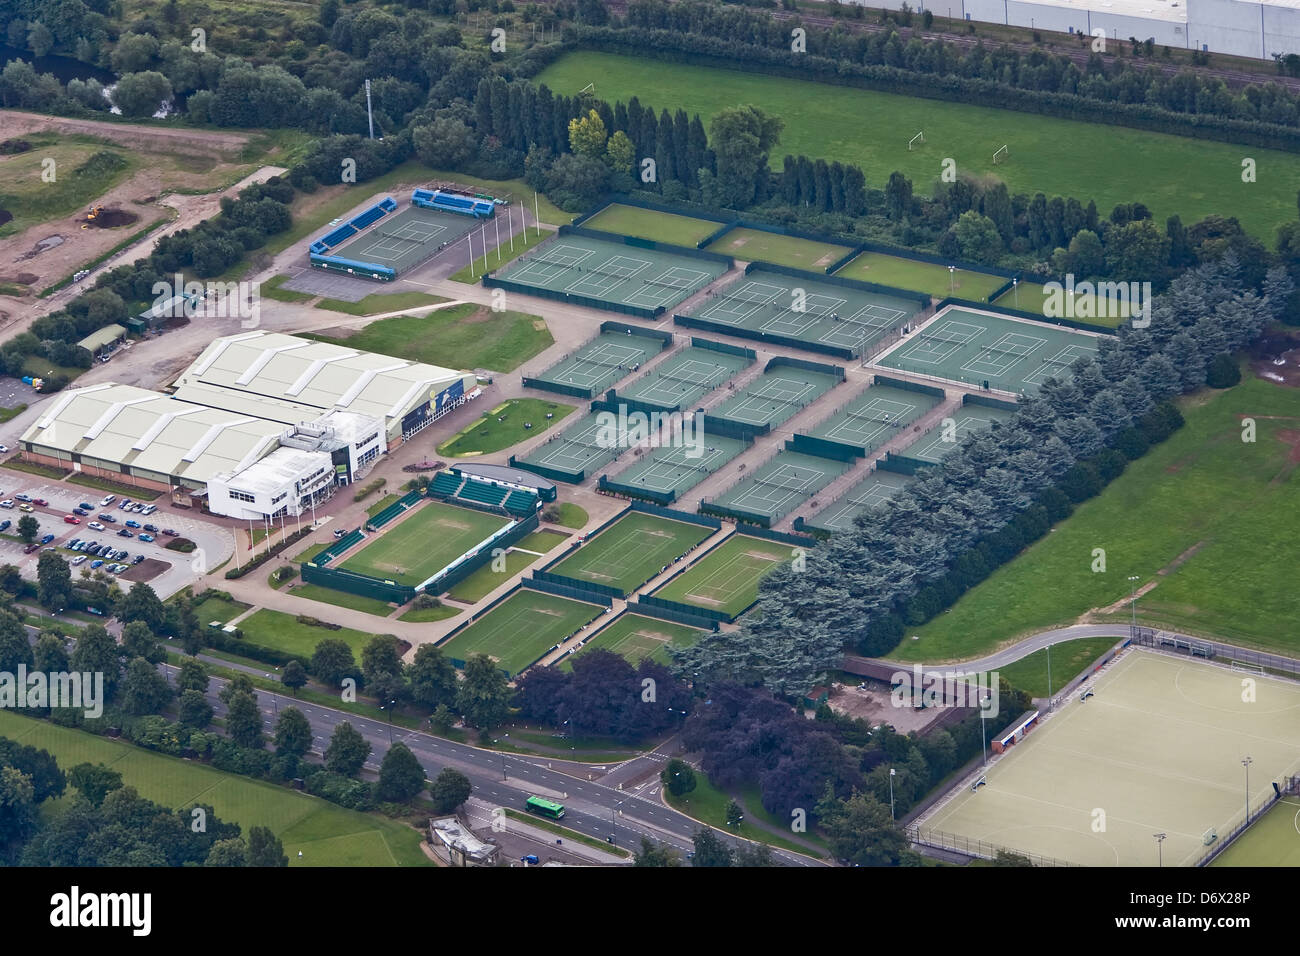 Aerial image of Nottingham Tennis Centre Stock Photo - Alamy